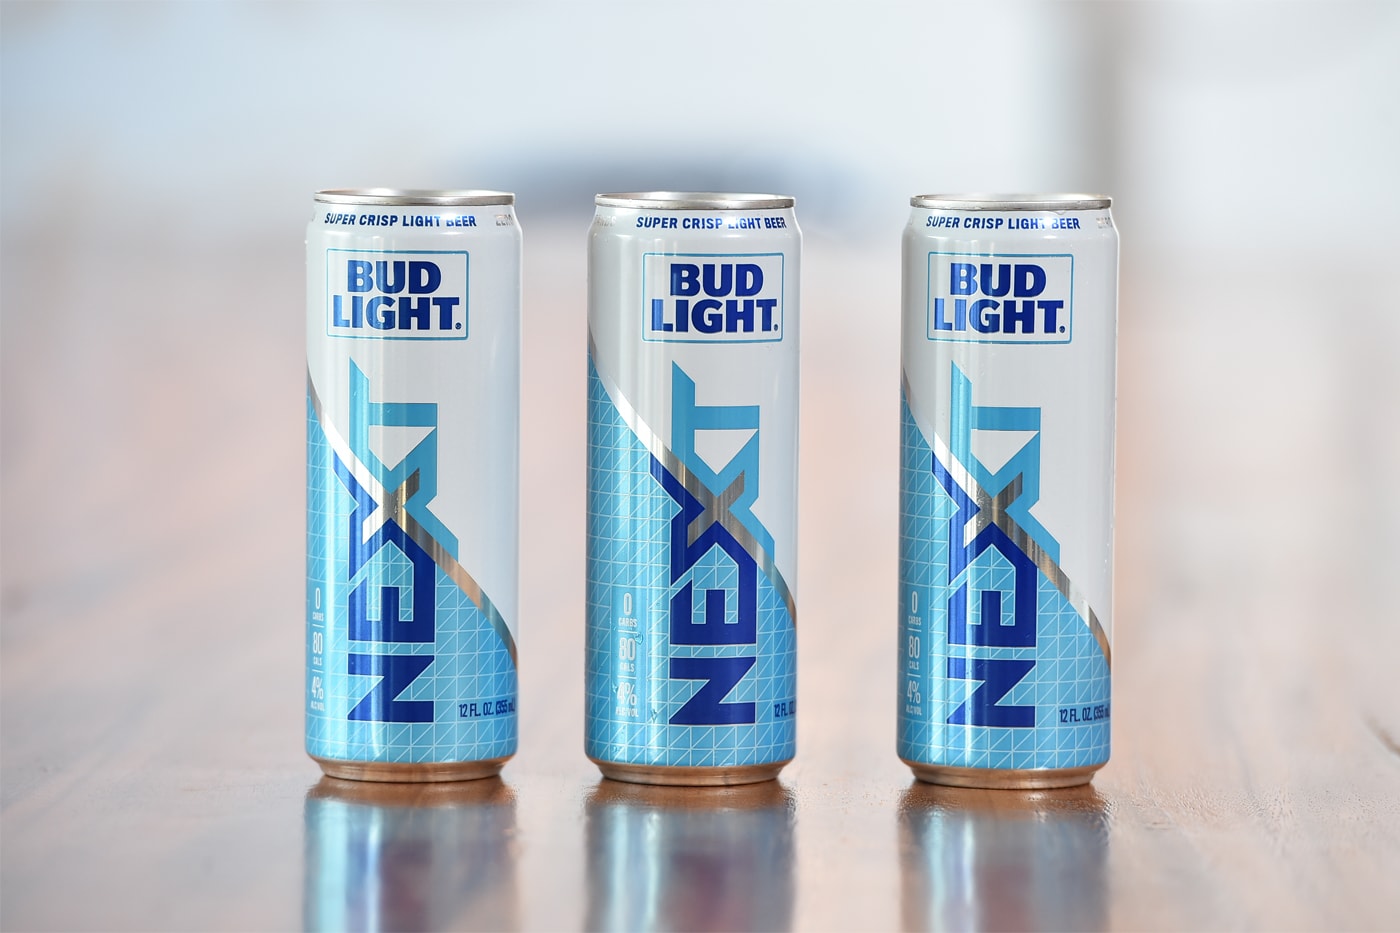 Bud Light NEXT zero carb beer 80 calories 4 percent stats of a seltzer crisp nft project 12722 tokens events news february 6 7 news 